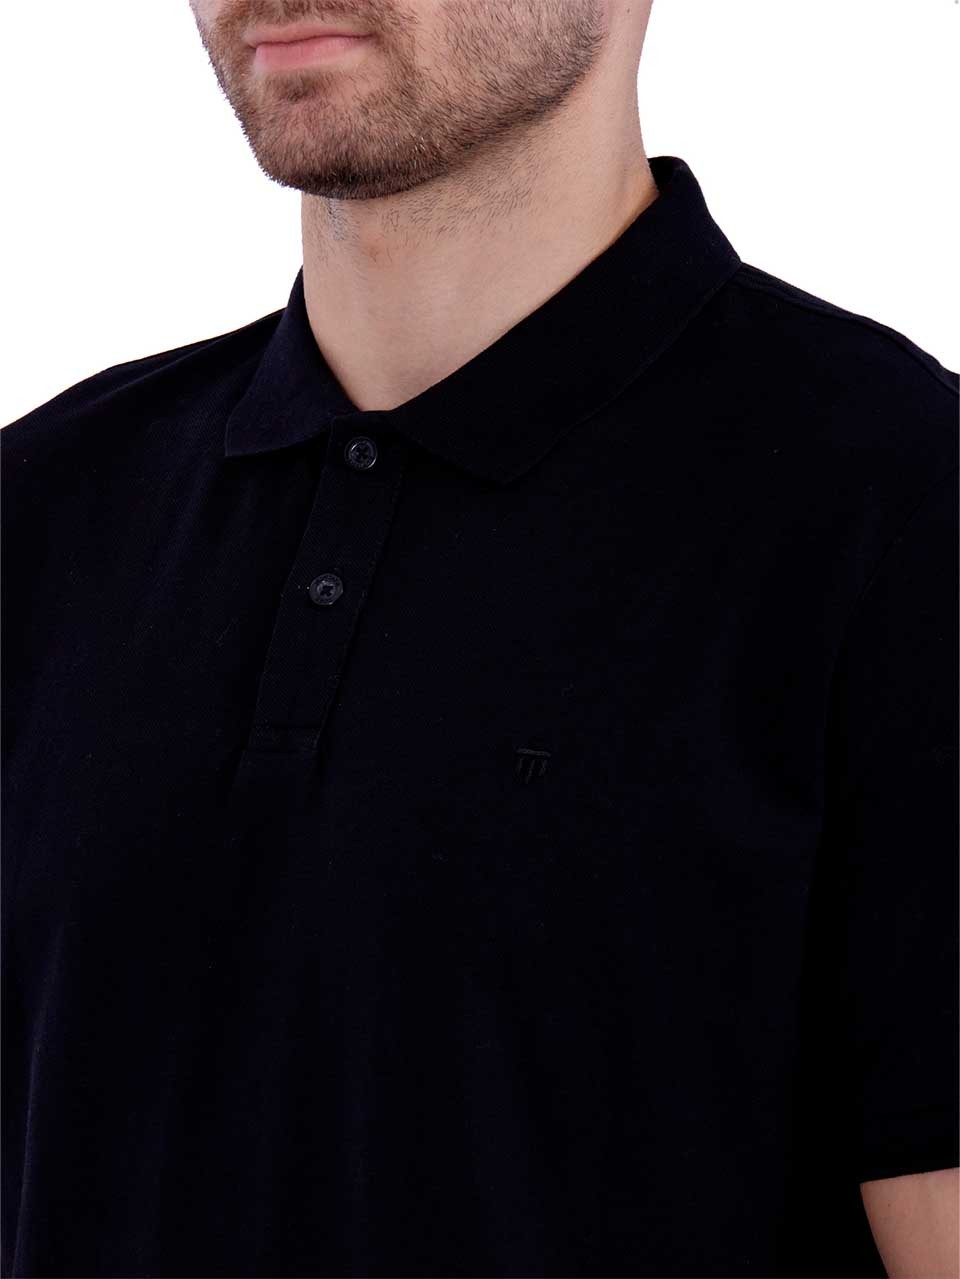 Black Penye T-shirt with polo collar 